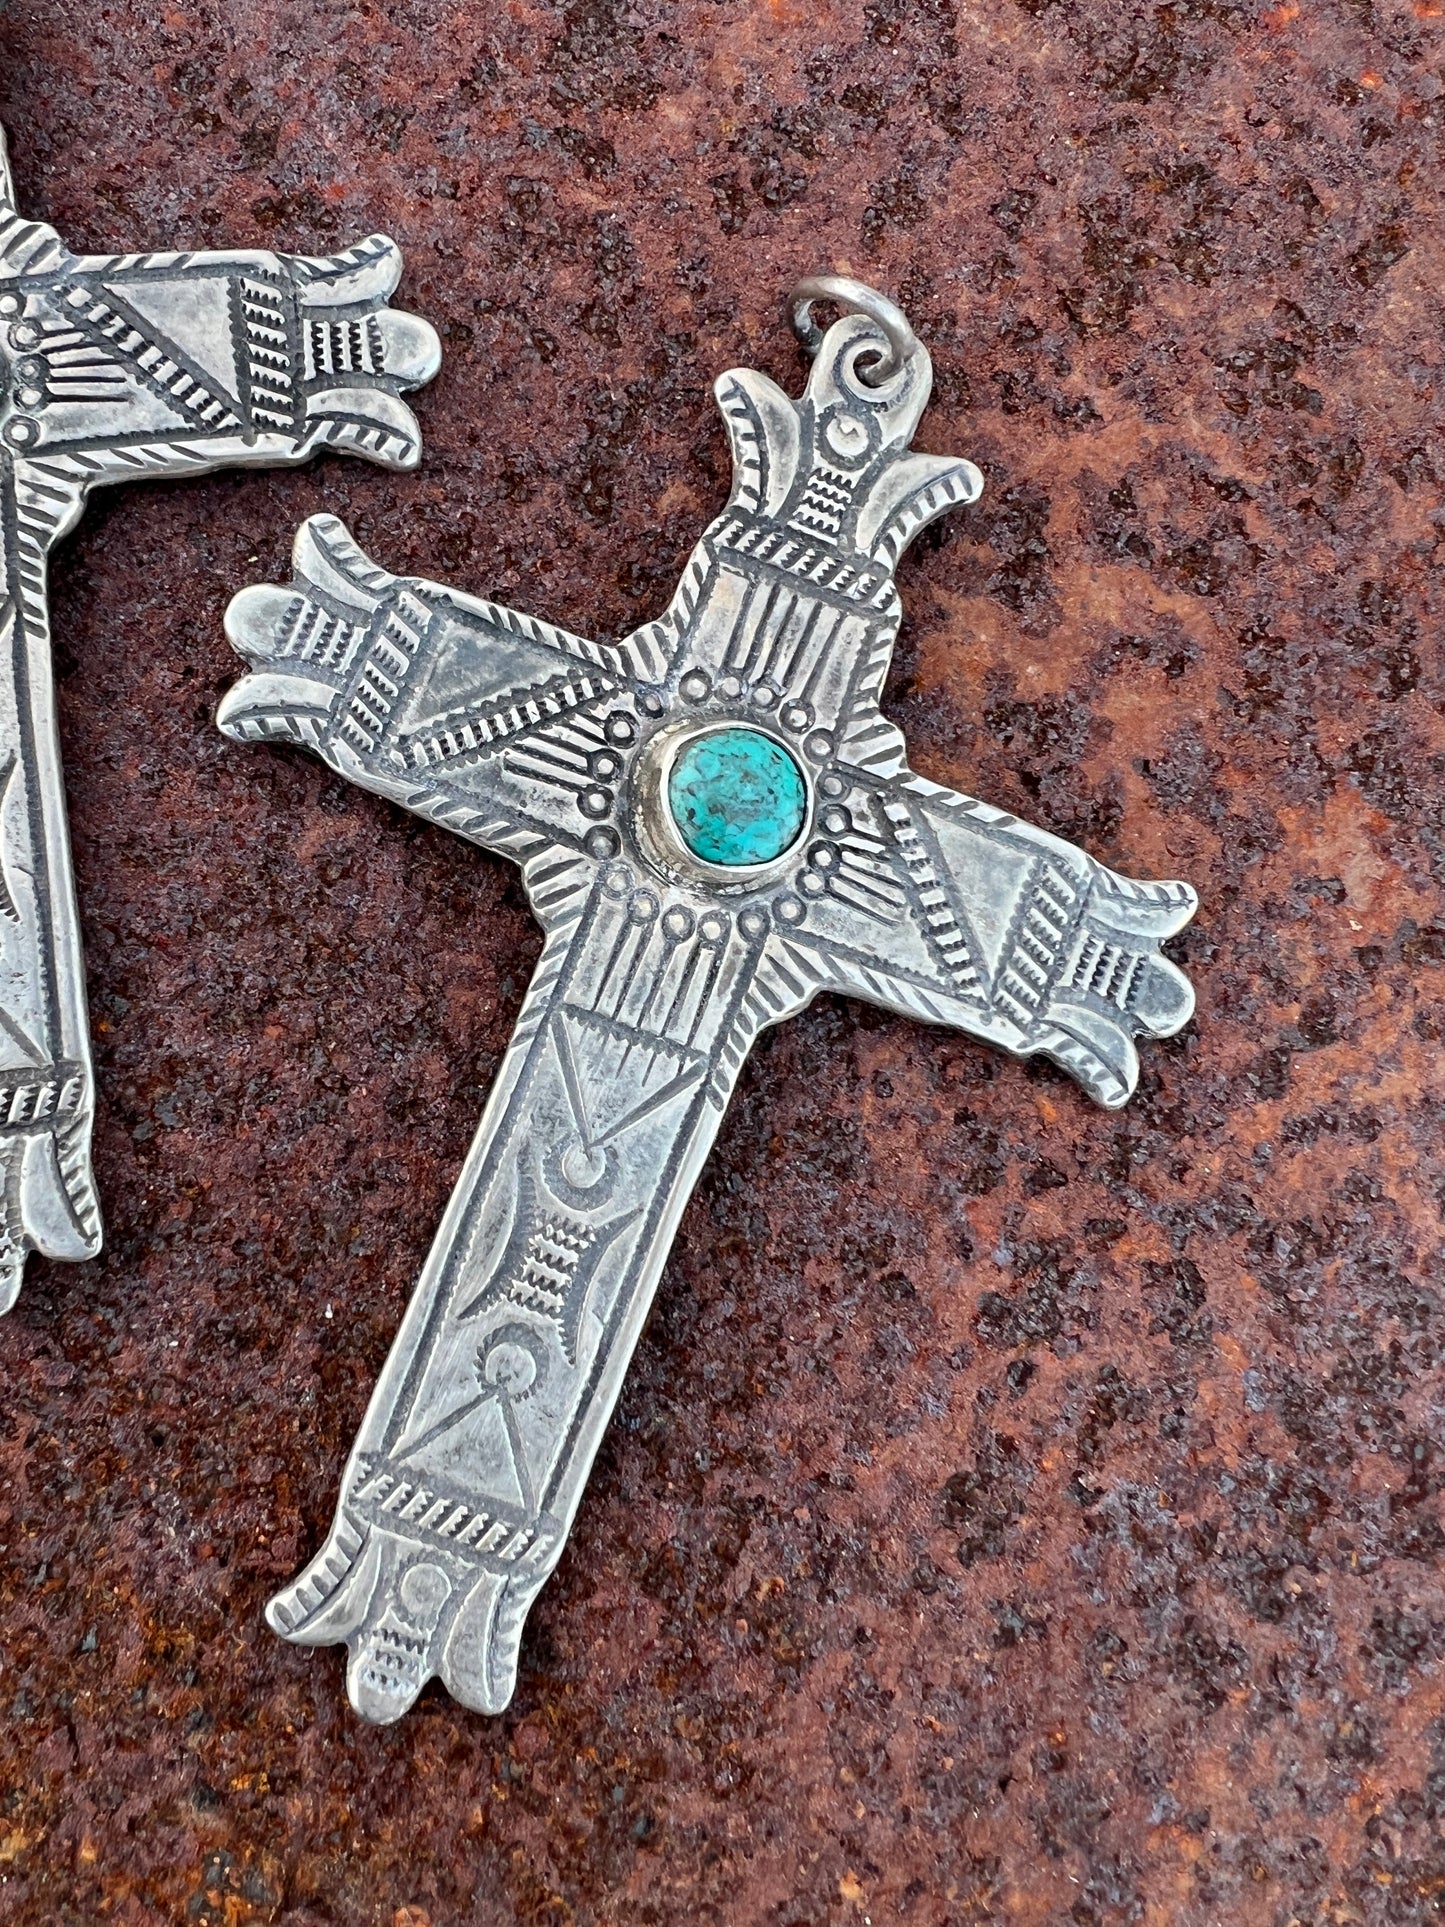 Spanish Cross Pendants by Santa Fe Artist, Buffalo